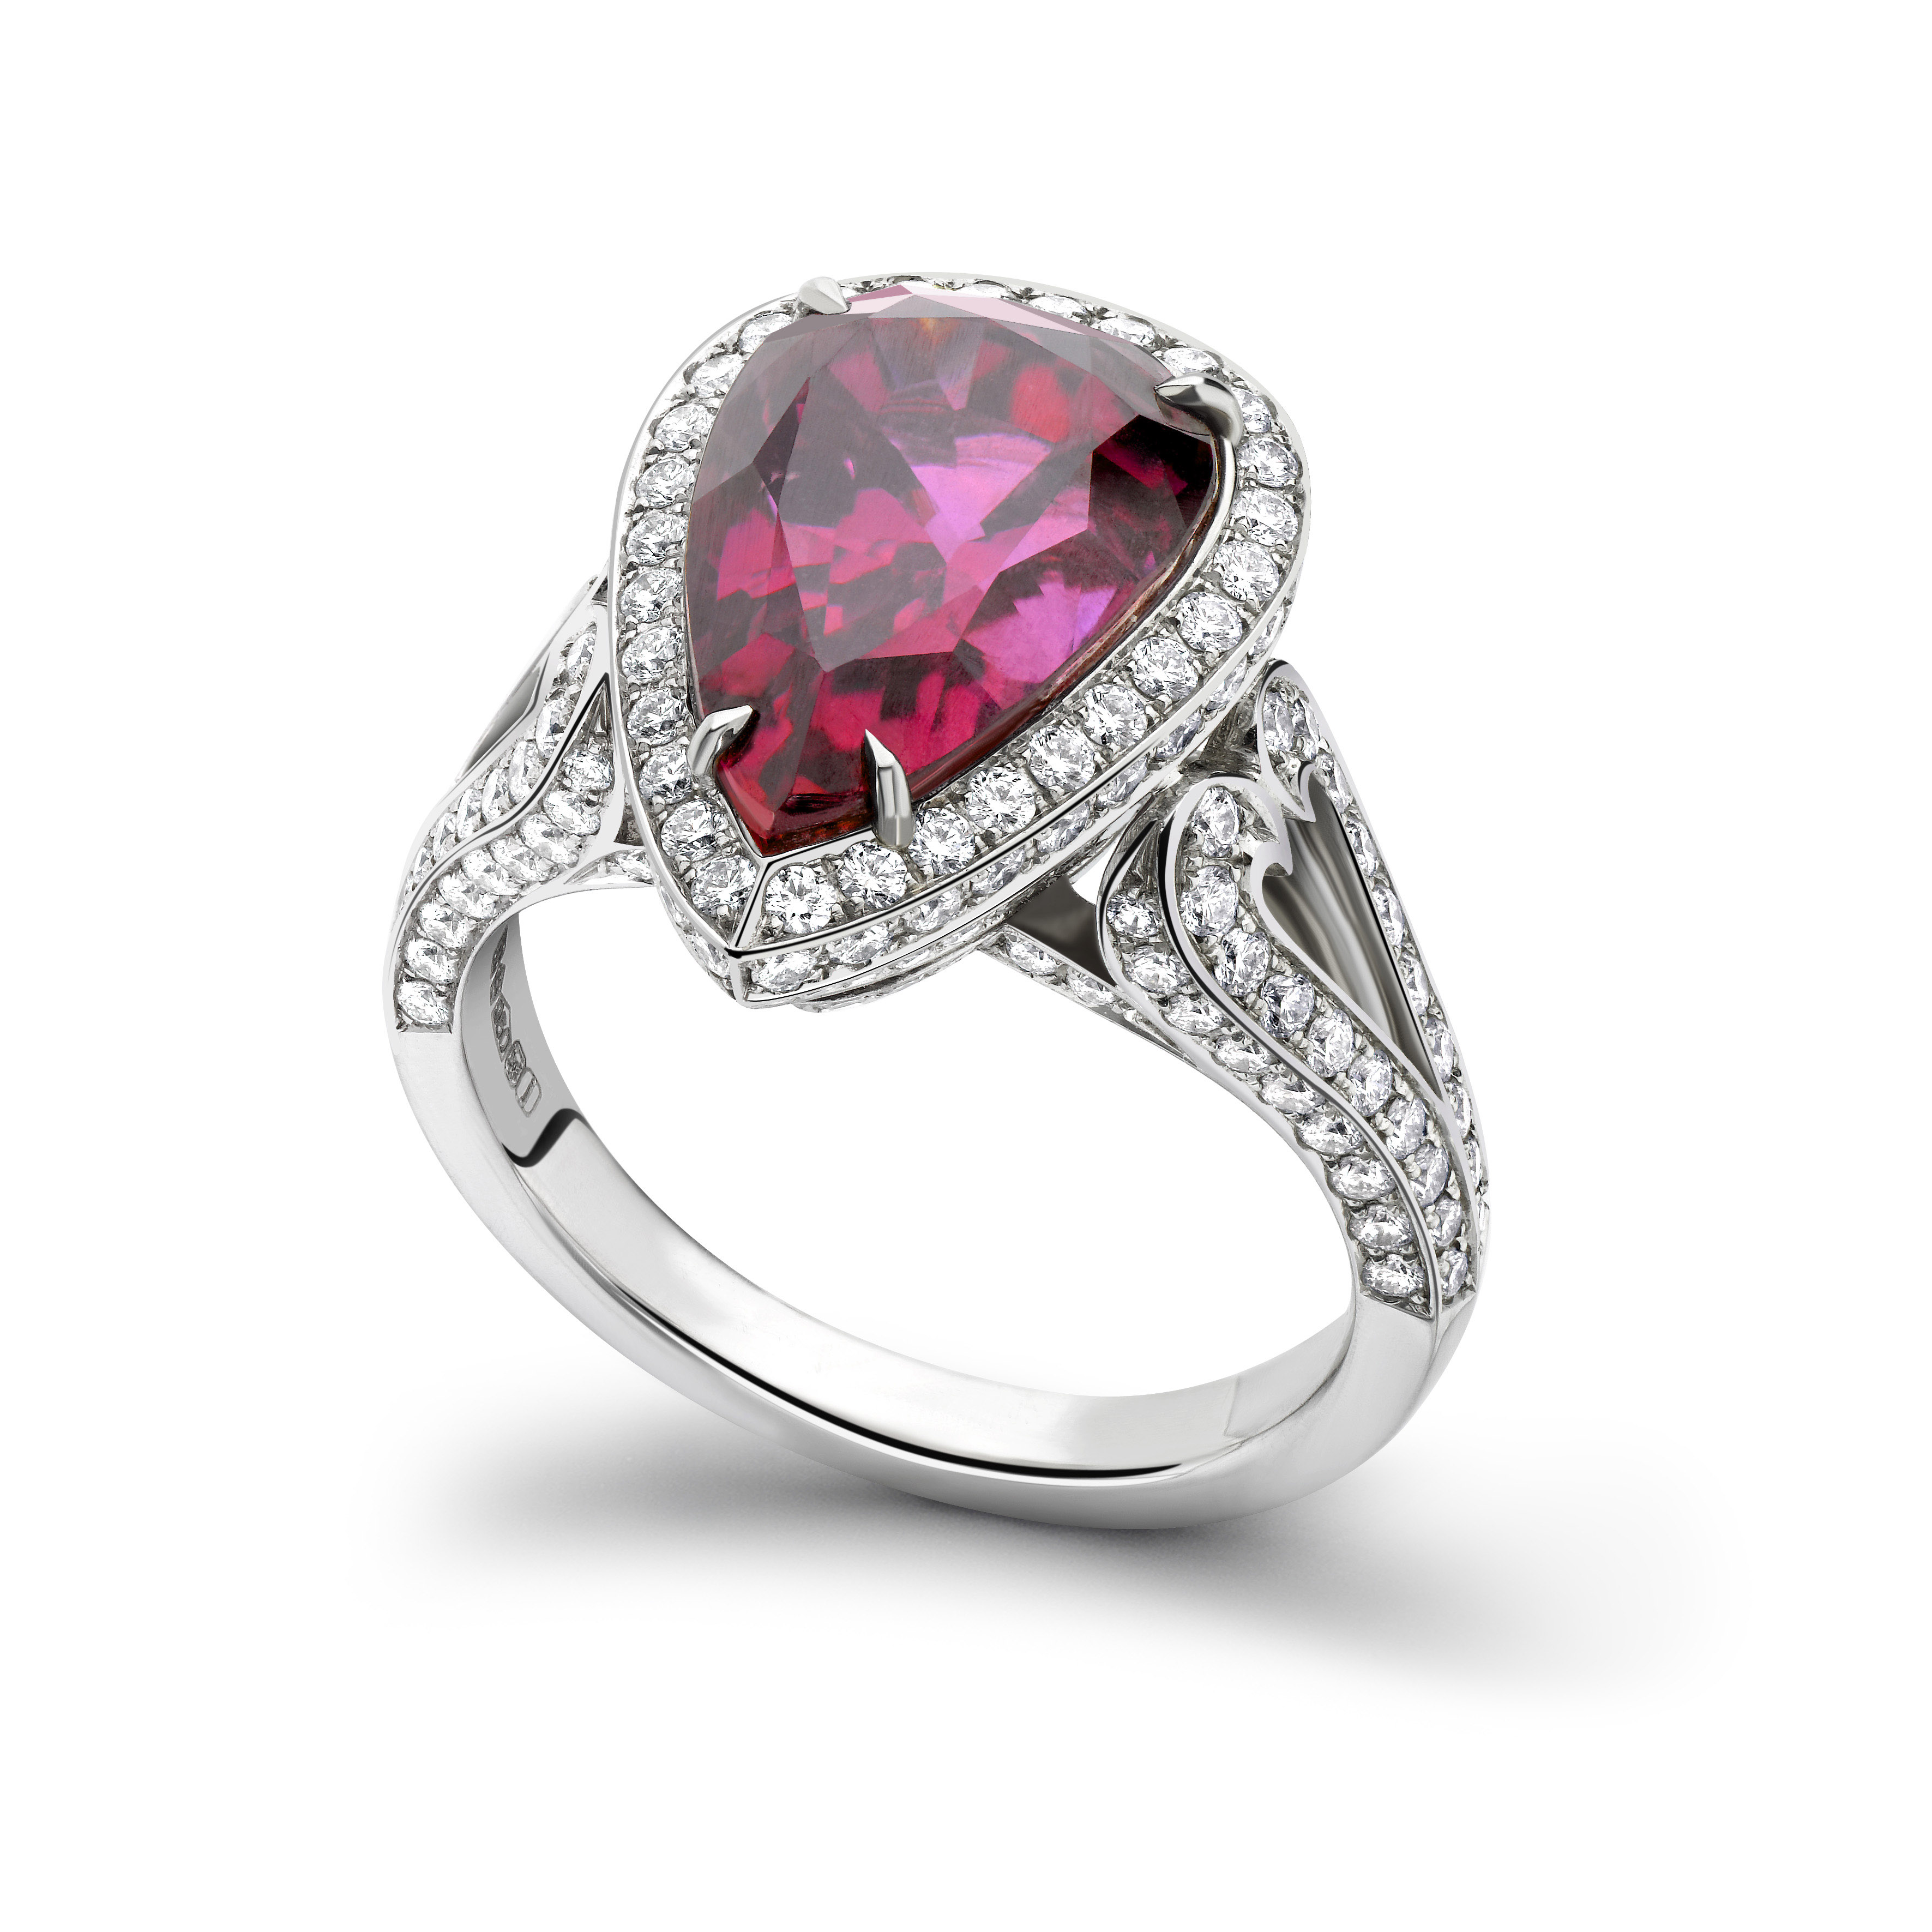 Garrards's Heart shaped Ruby & Diamonds ring